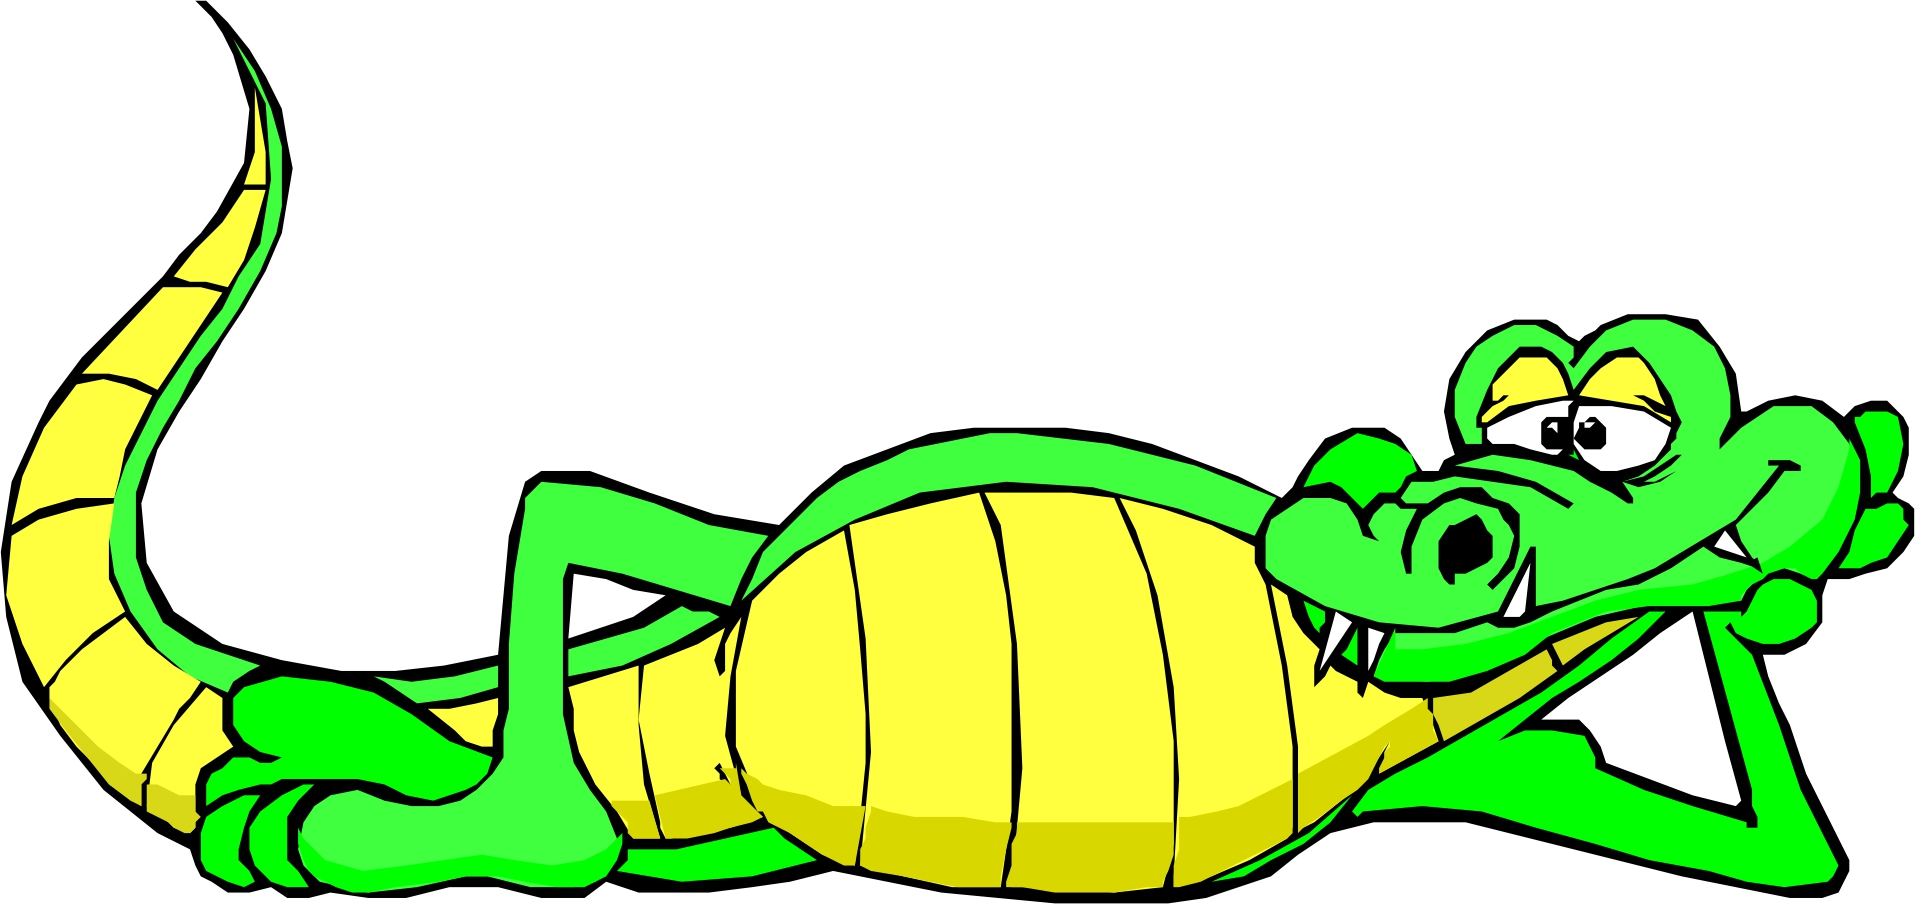 Cartoon Alligator - ClipArt Best